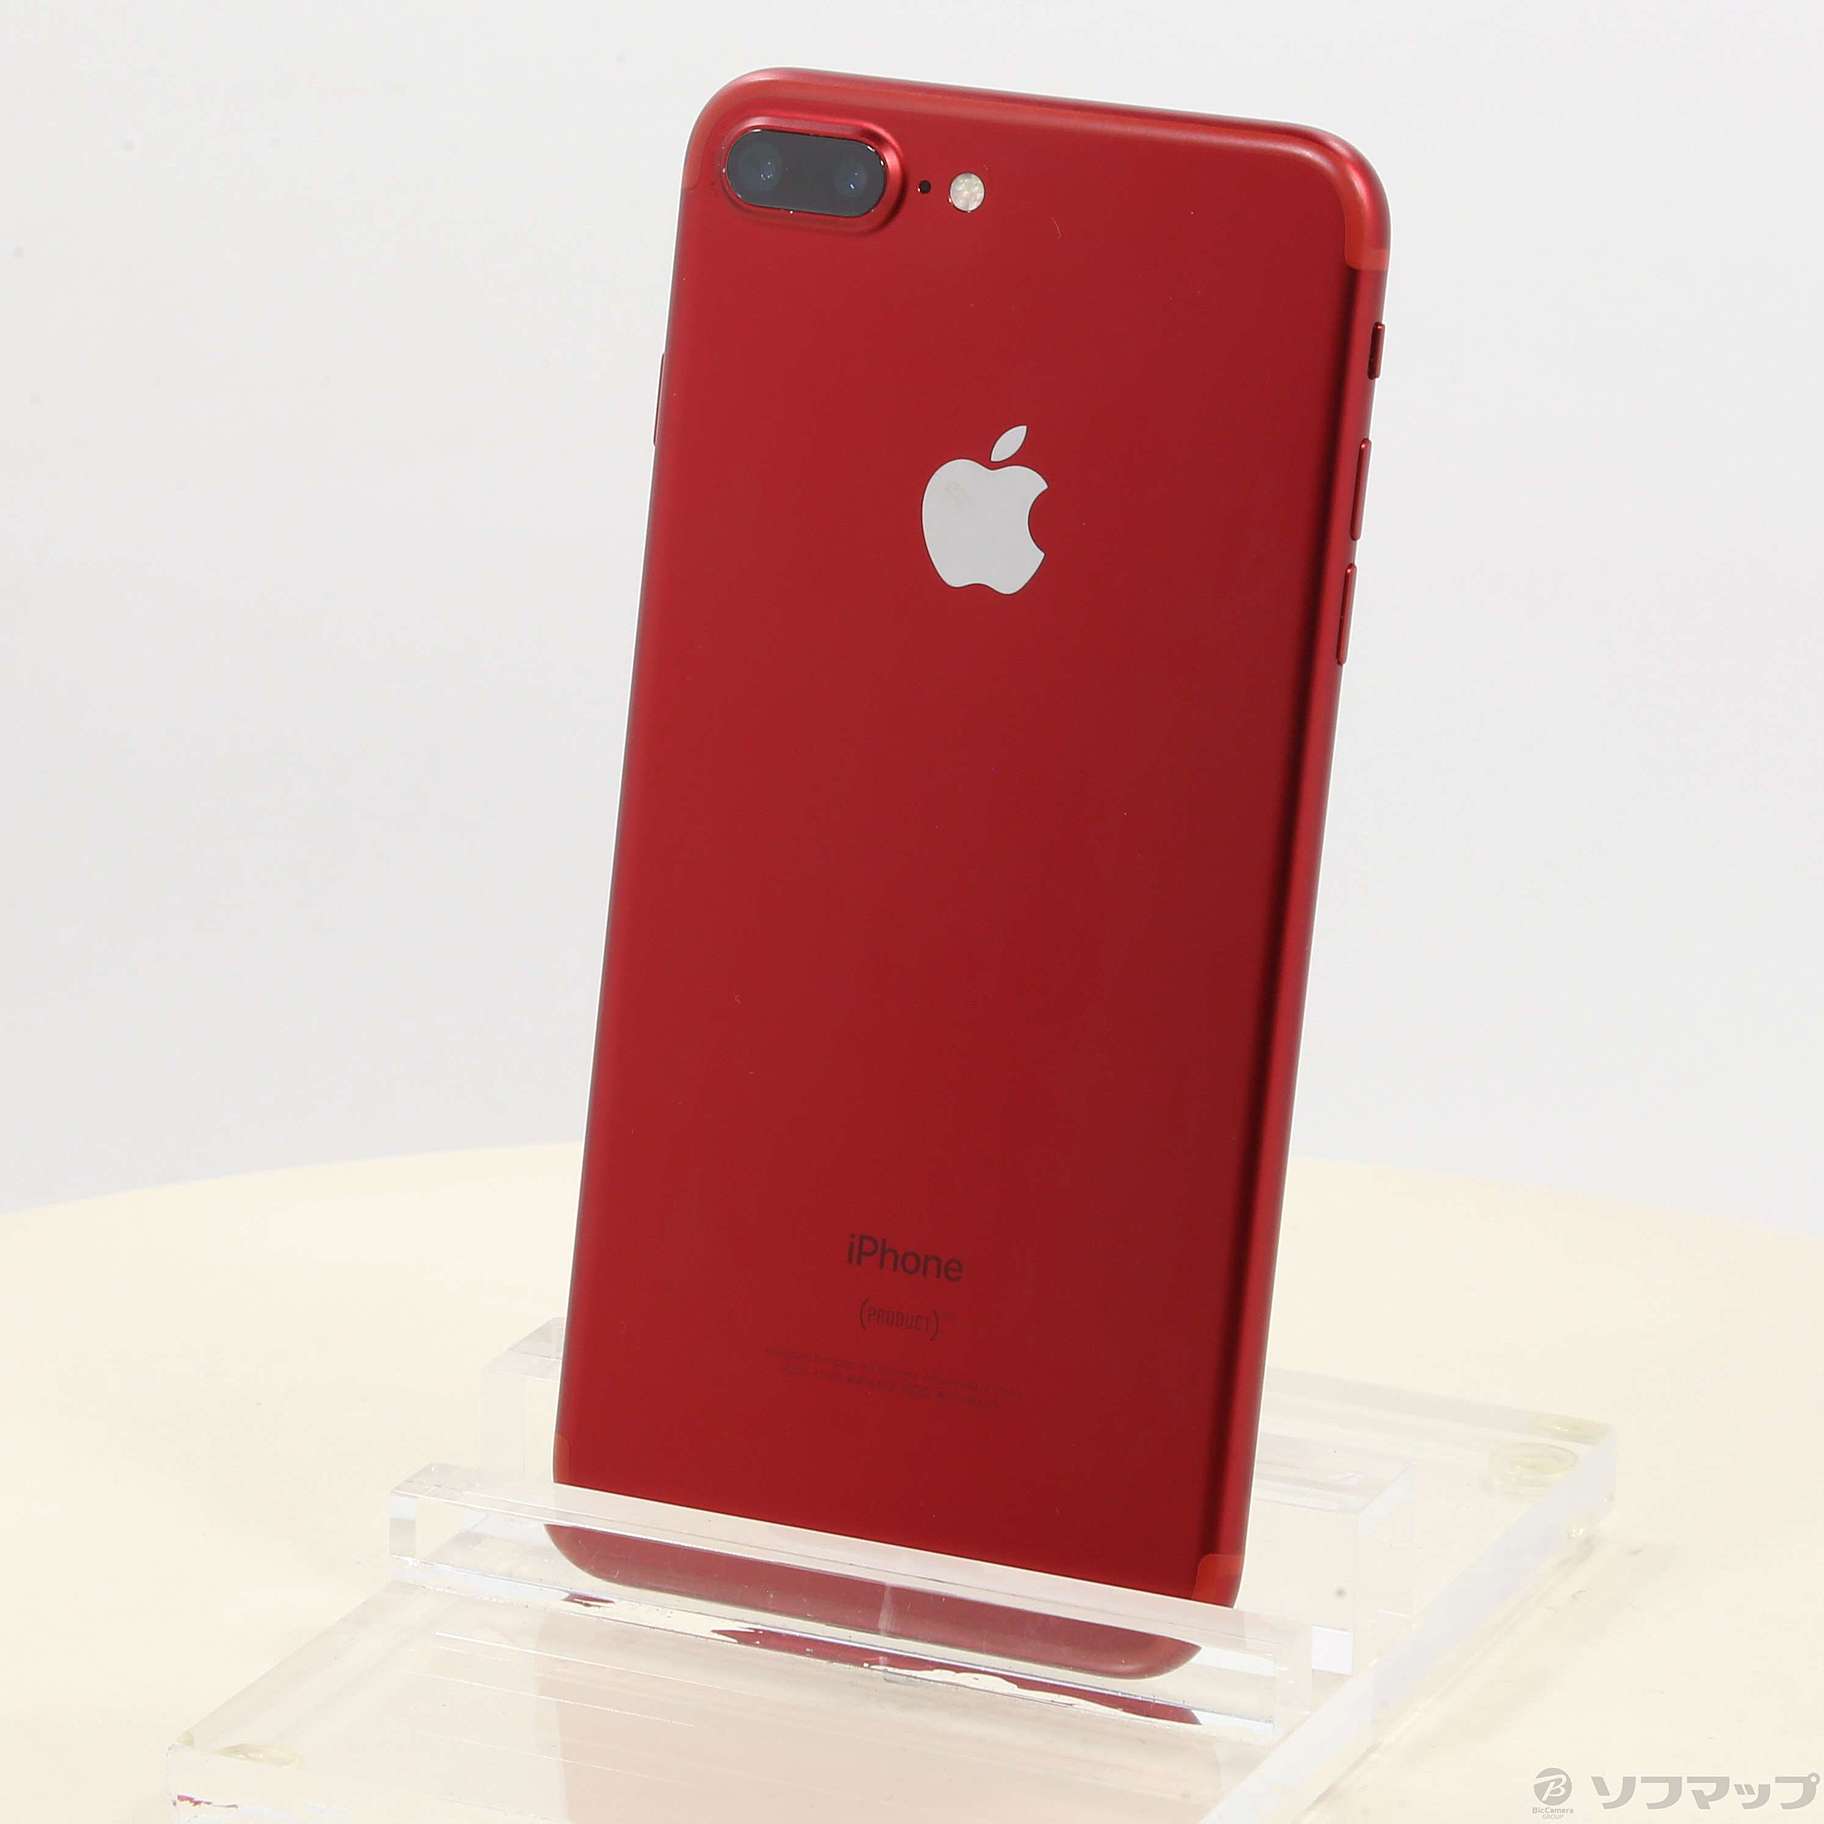 SIMフリー iPhone7plus 128GB product  red